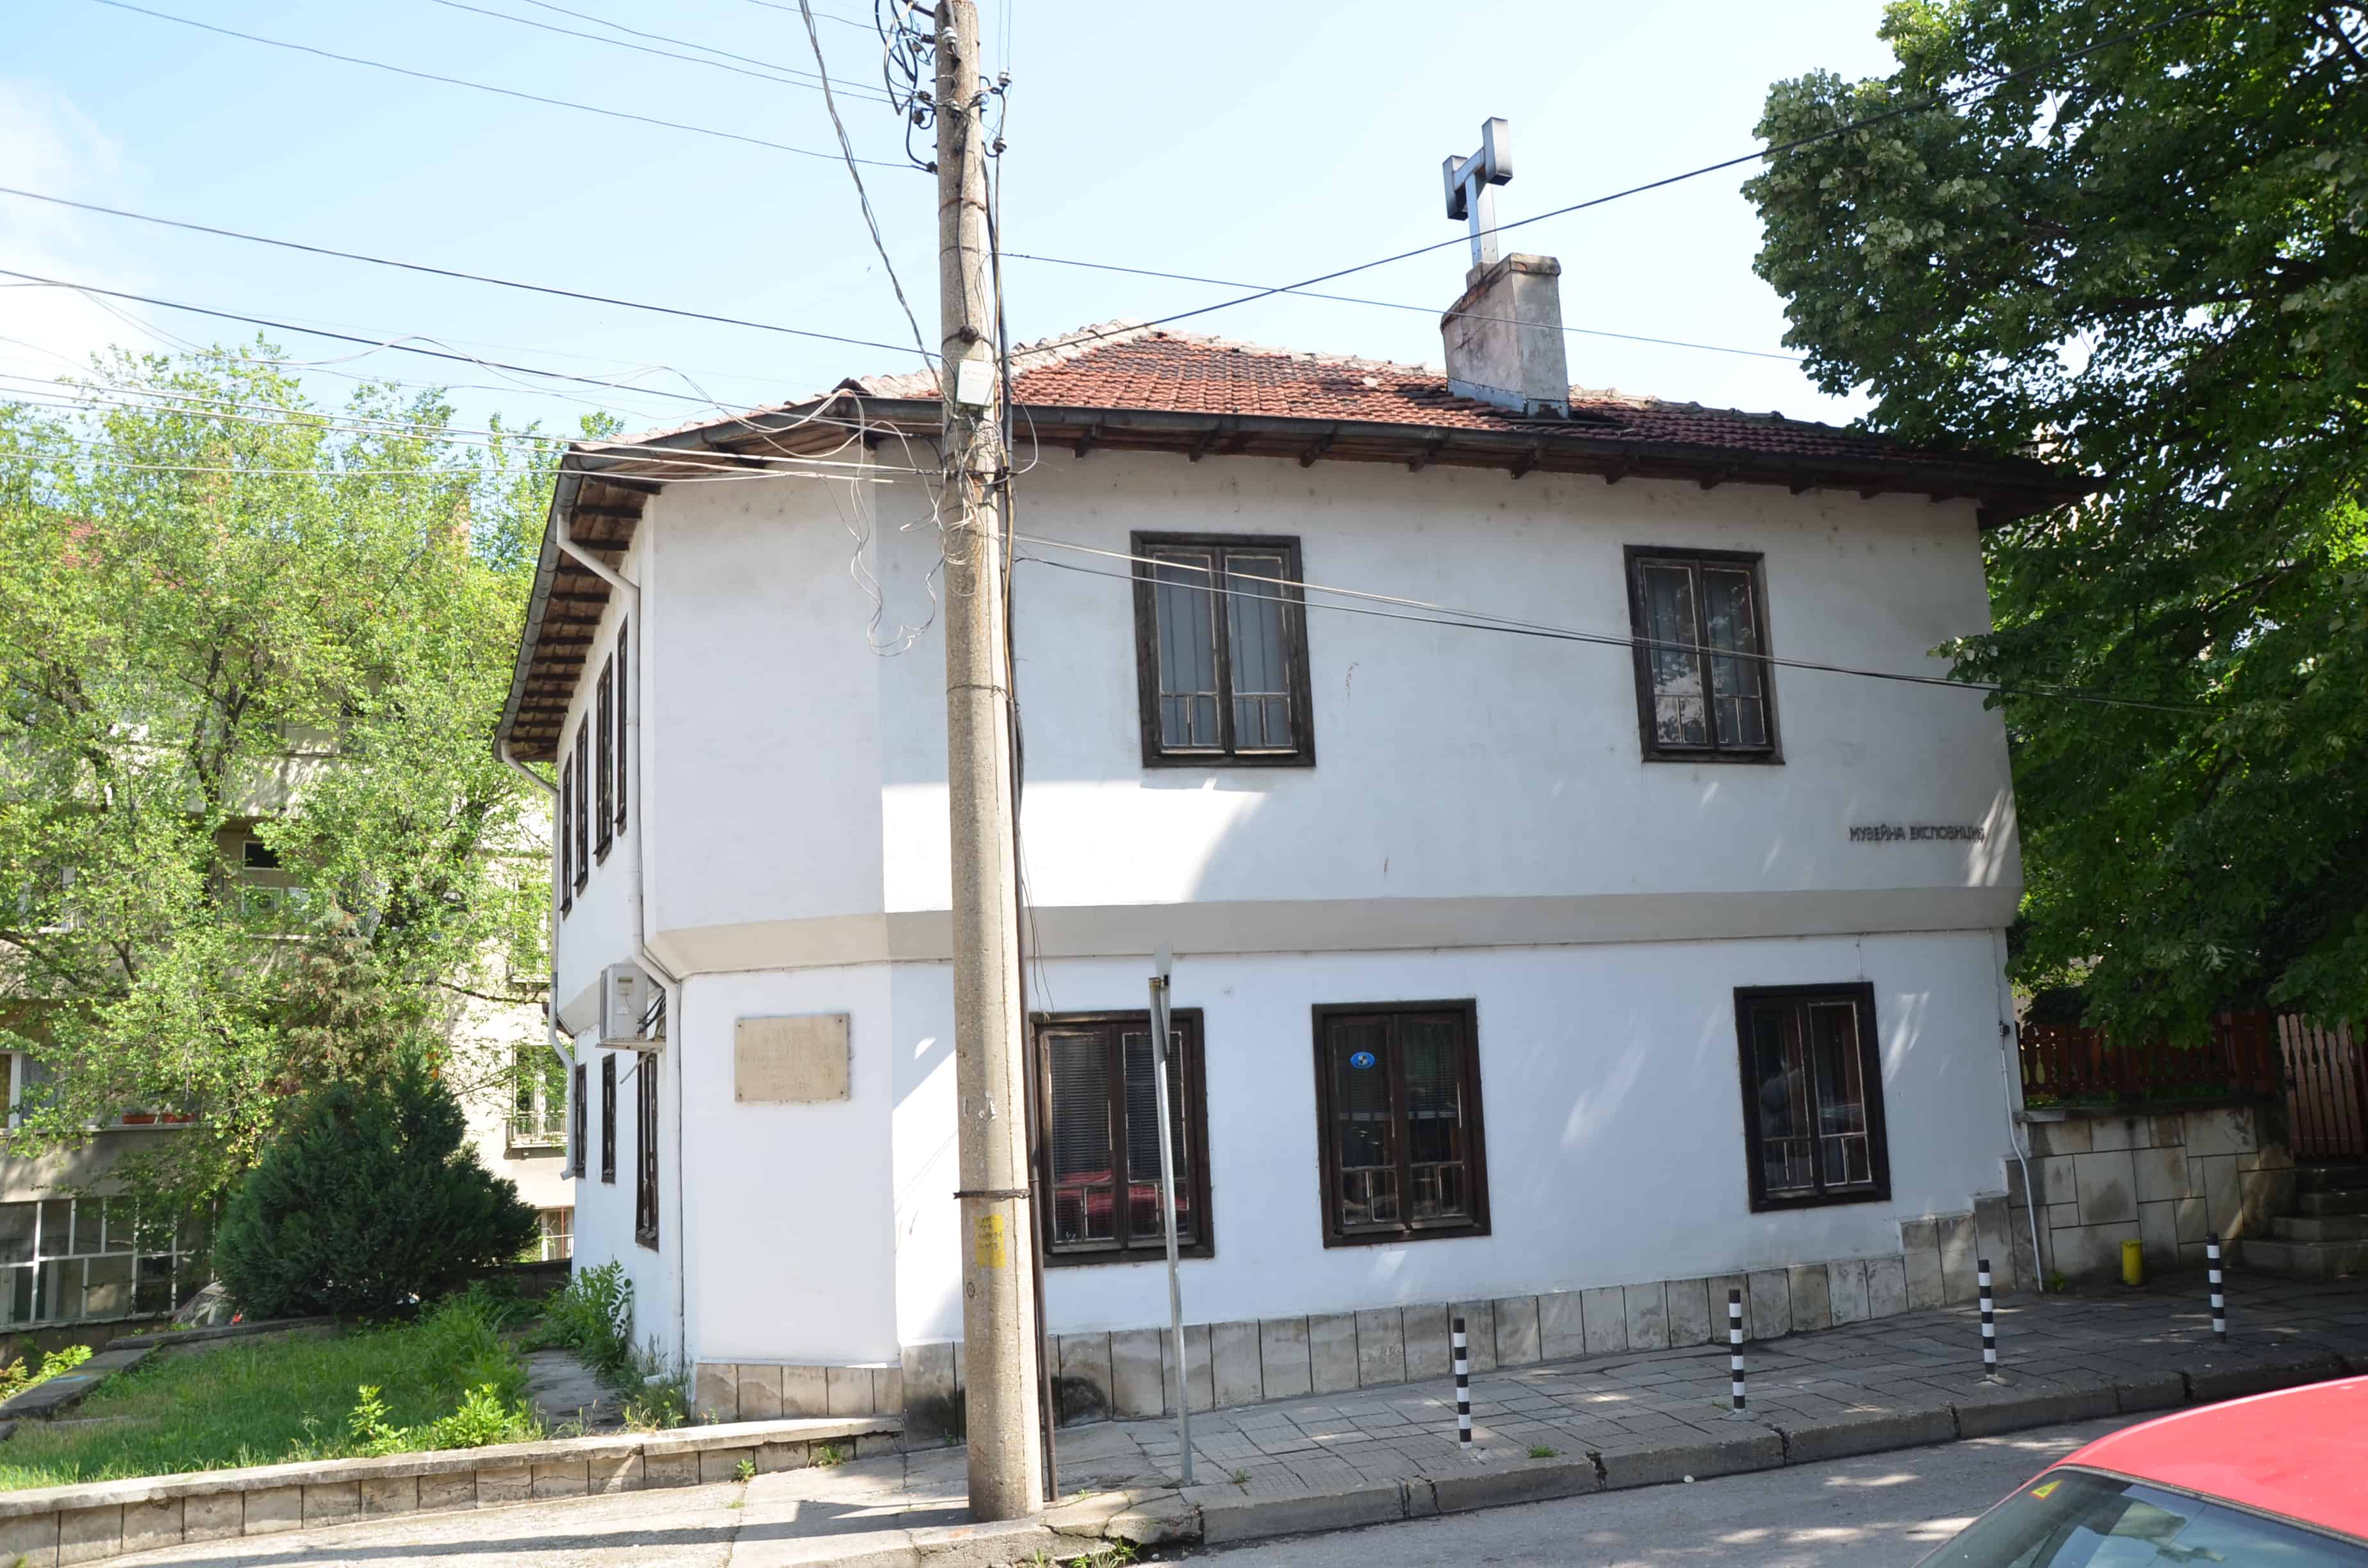 Toma Kurdzhiev House in Ruse, Bulgaria